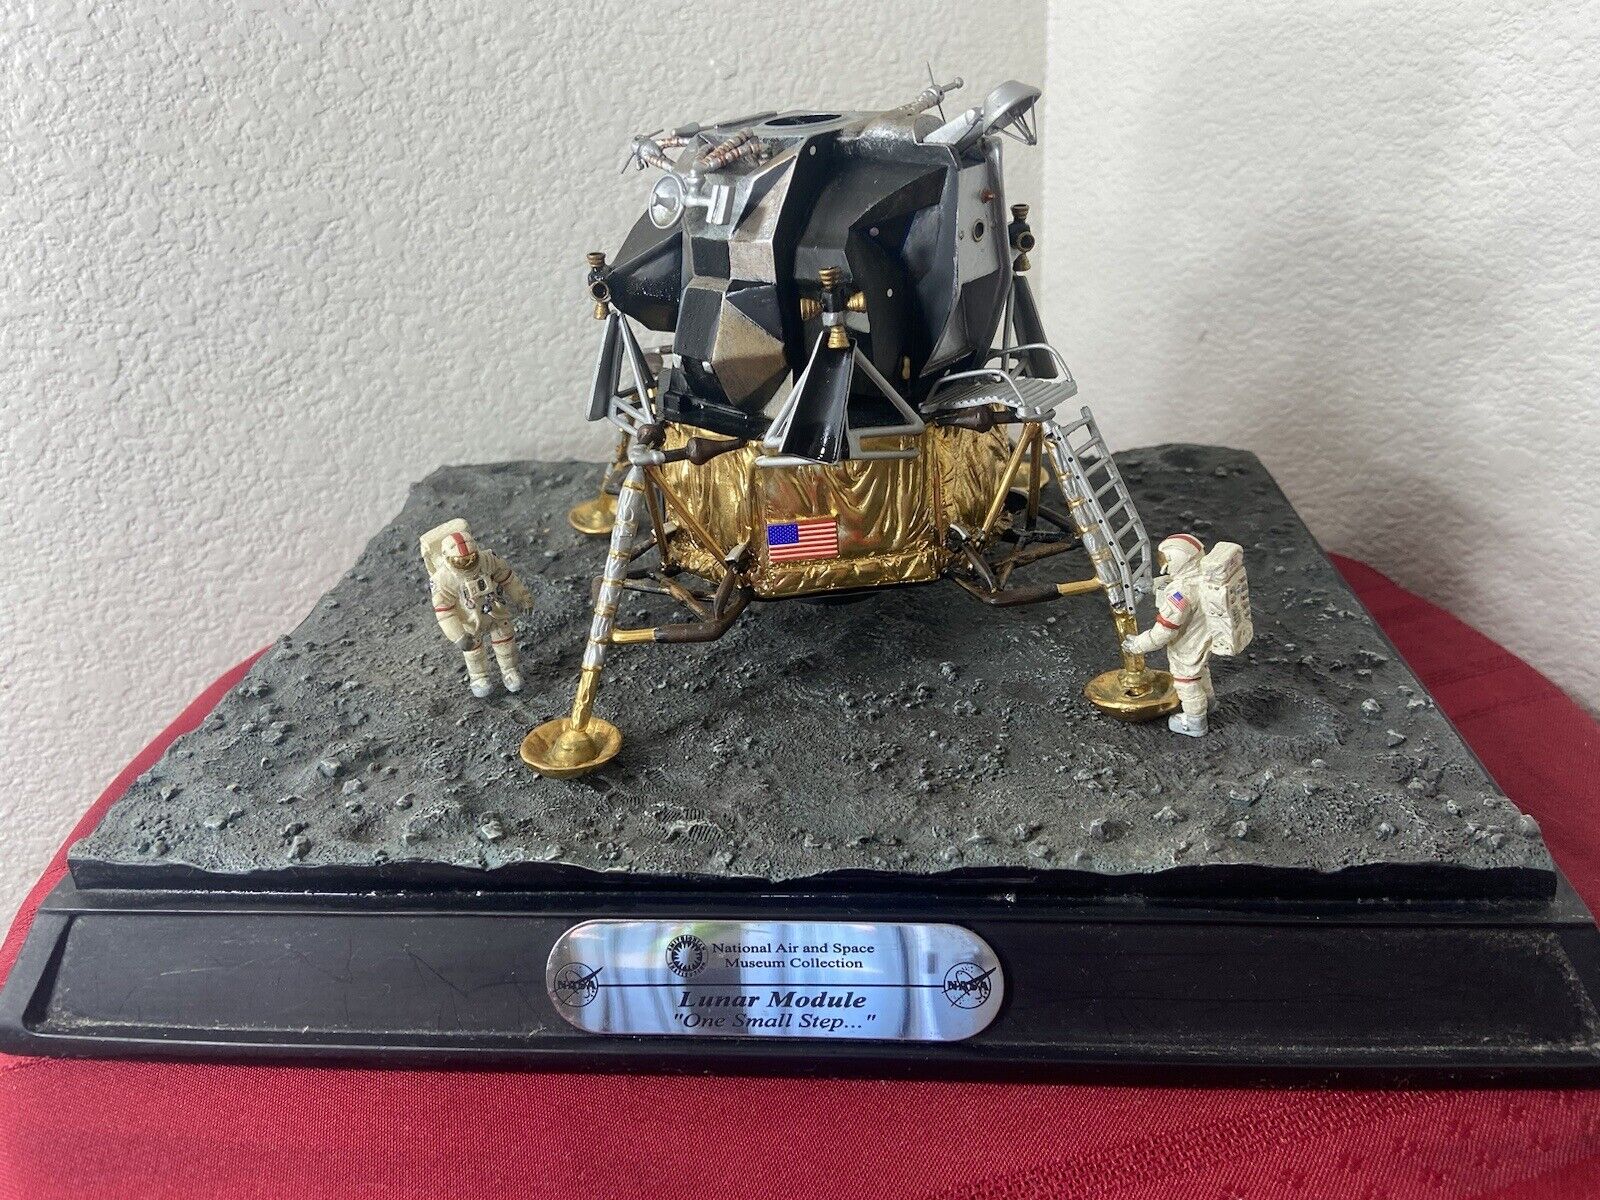 RARE Code 3 NASA Apollo Lunar Module  “One Small Step” Model